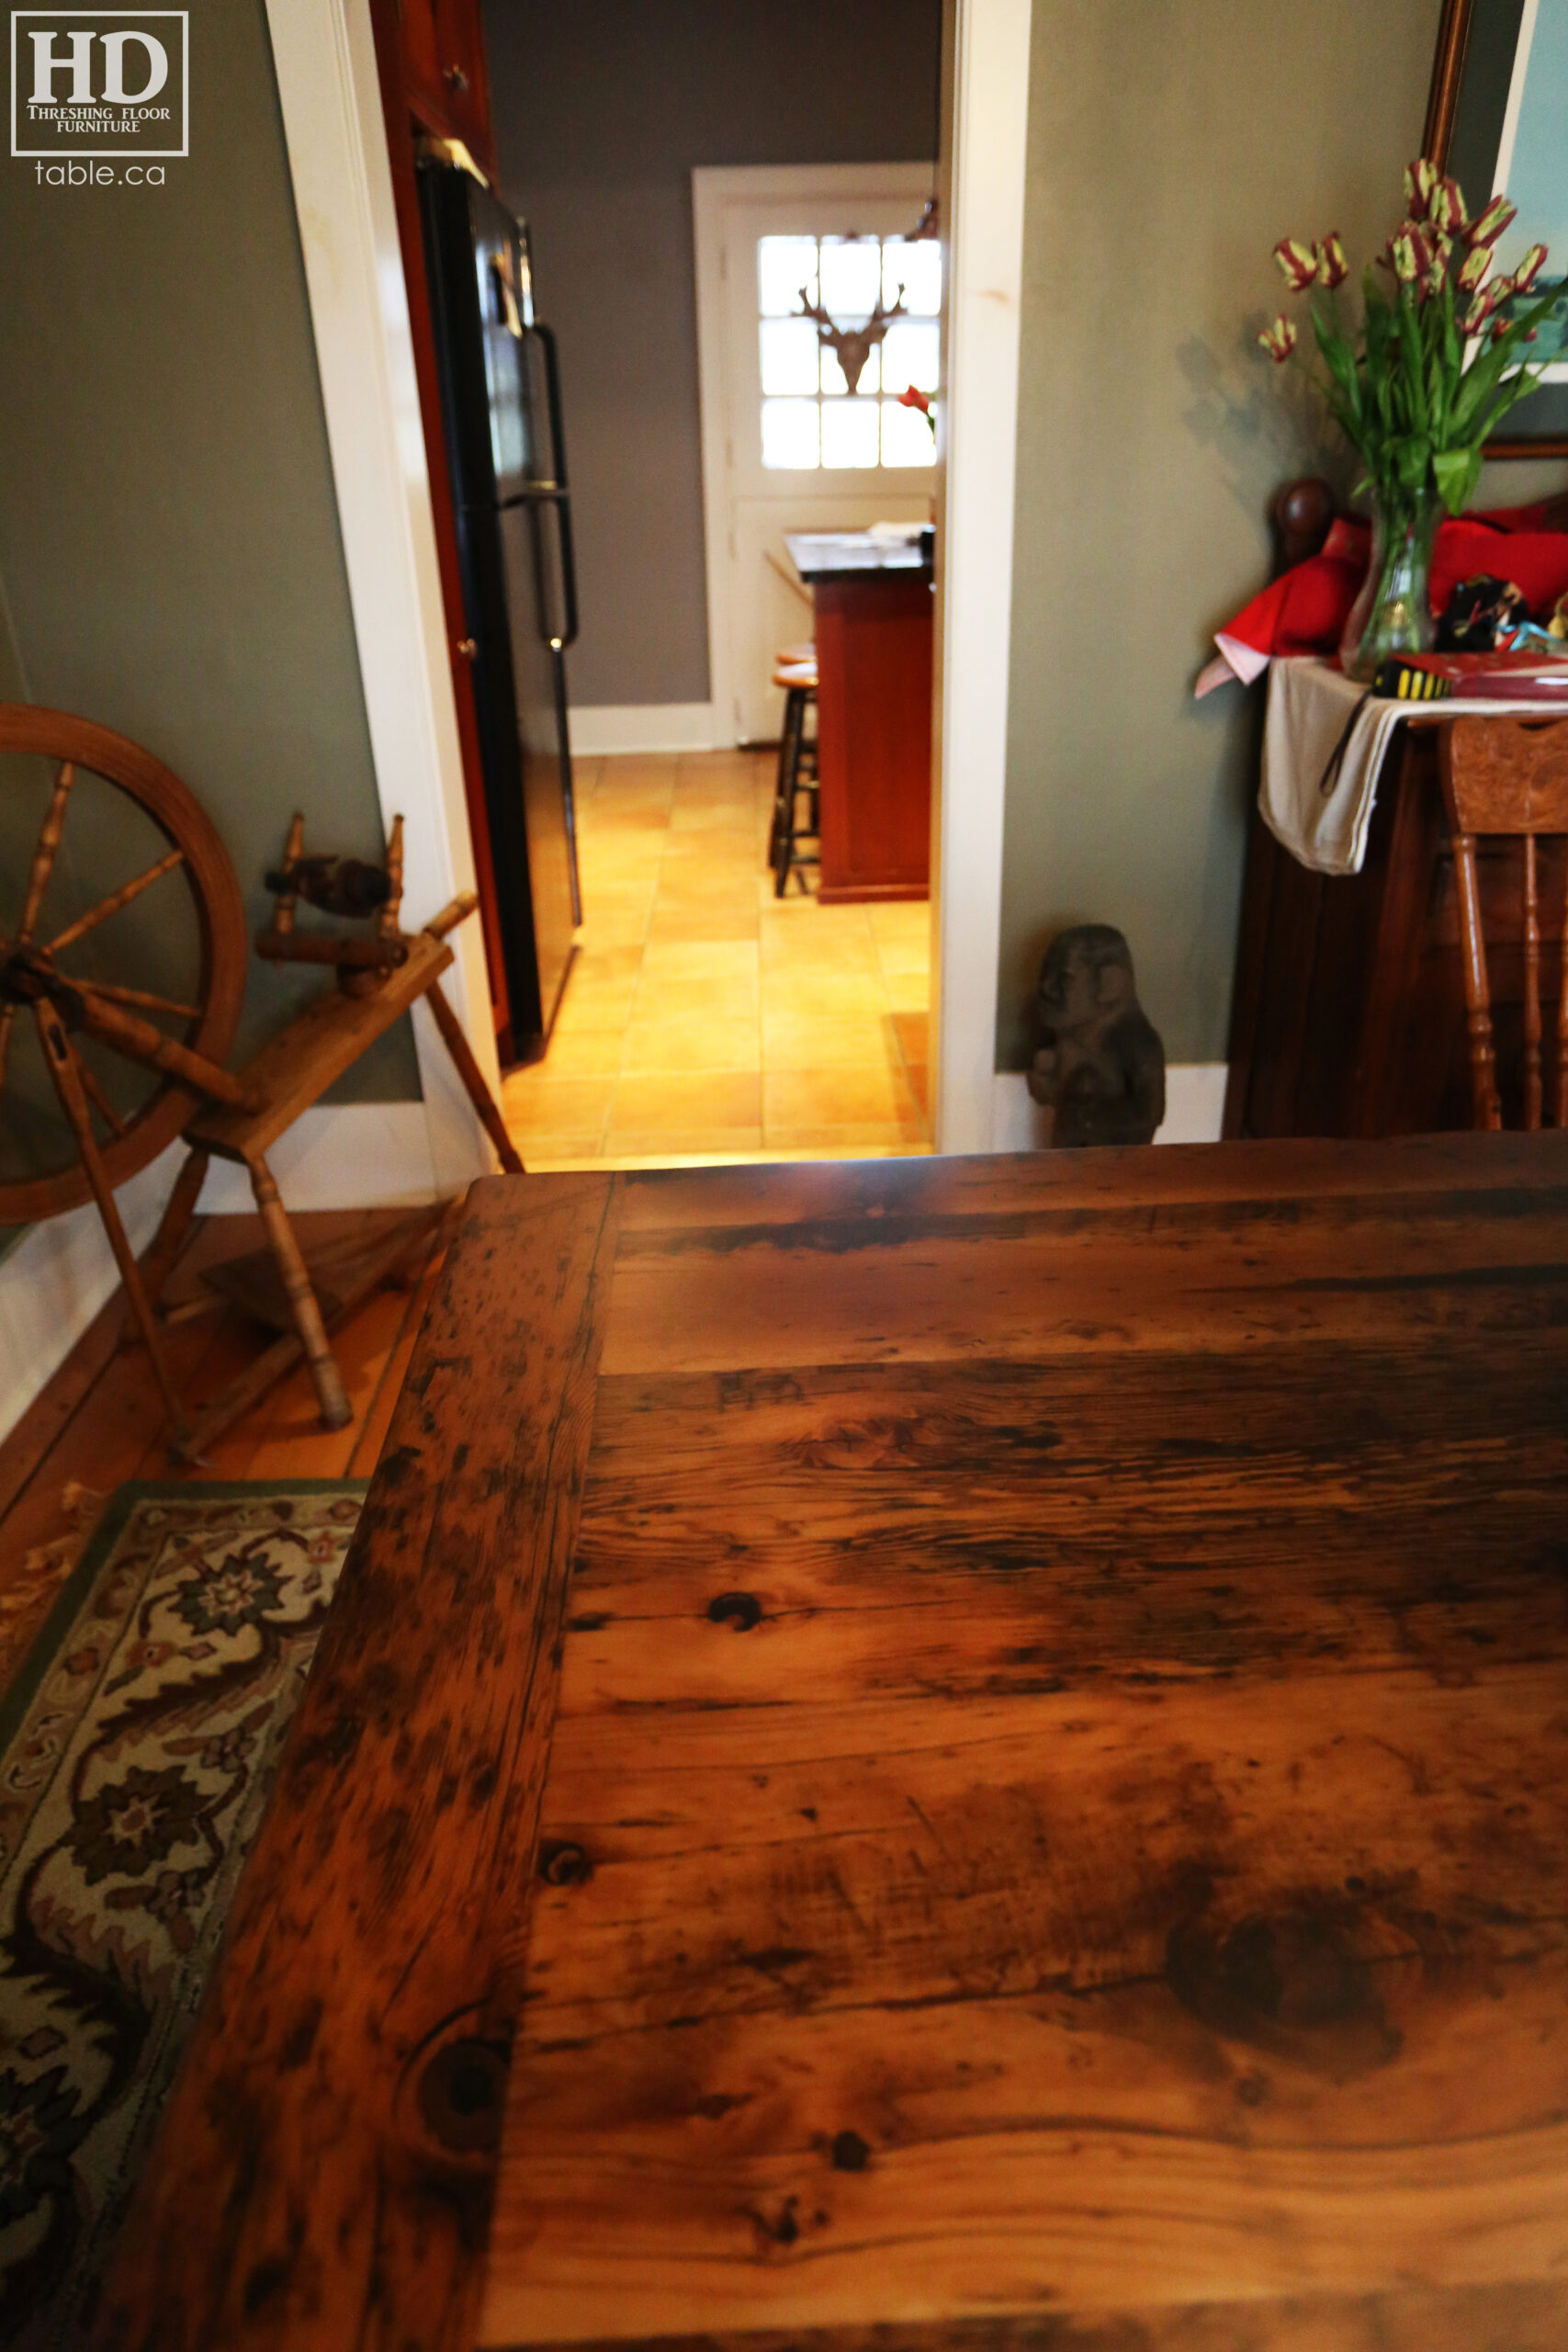 Custom Reclaimed Wood Table by HD Threshing Floor Furniture / www.table.ca